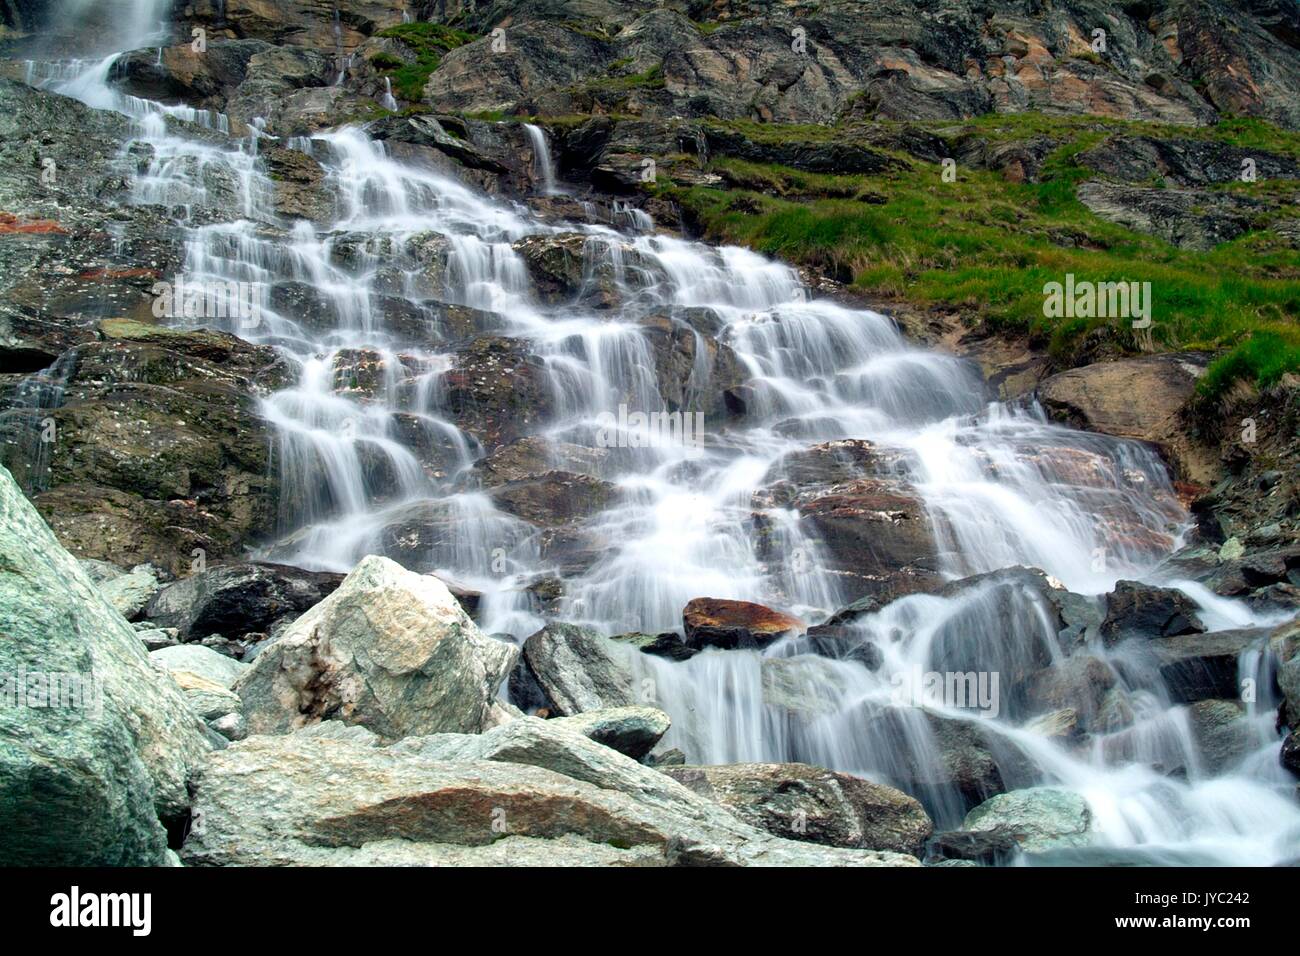 A waterfall in the Roseg Valley, Val Roseg, Engadine Switzerland Europe Stock Photo